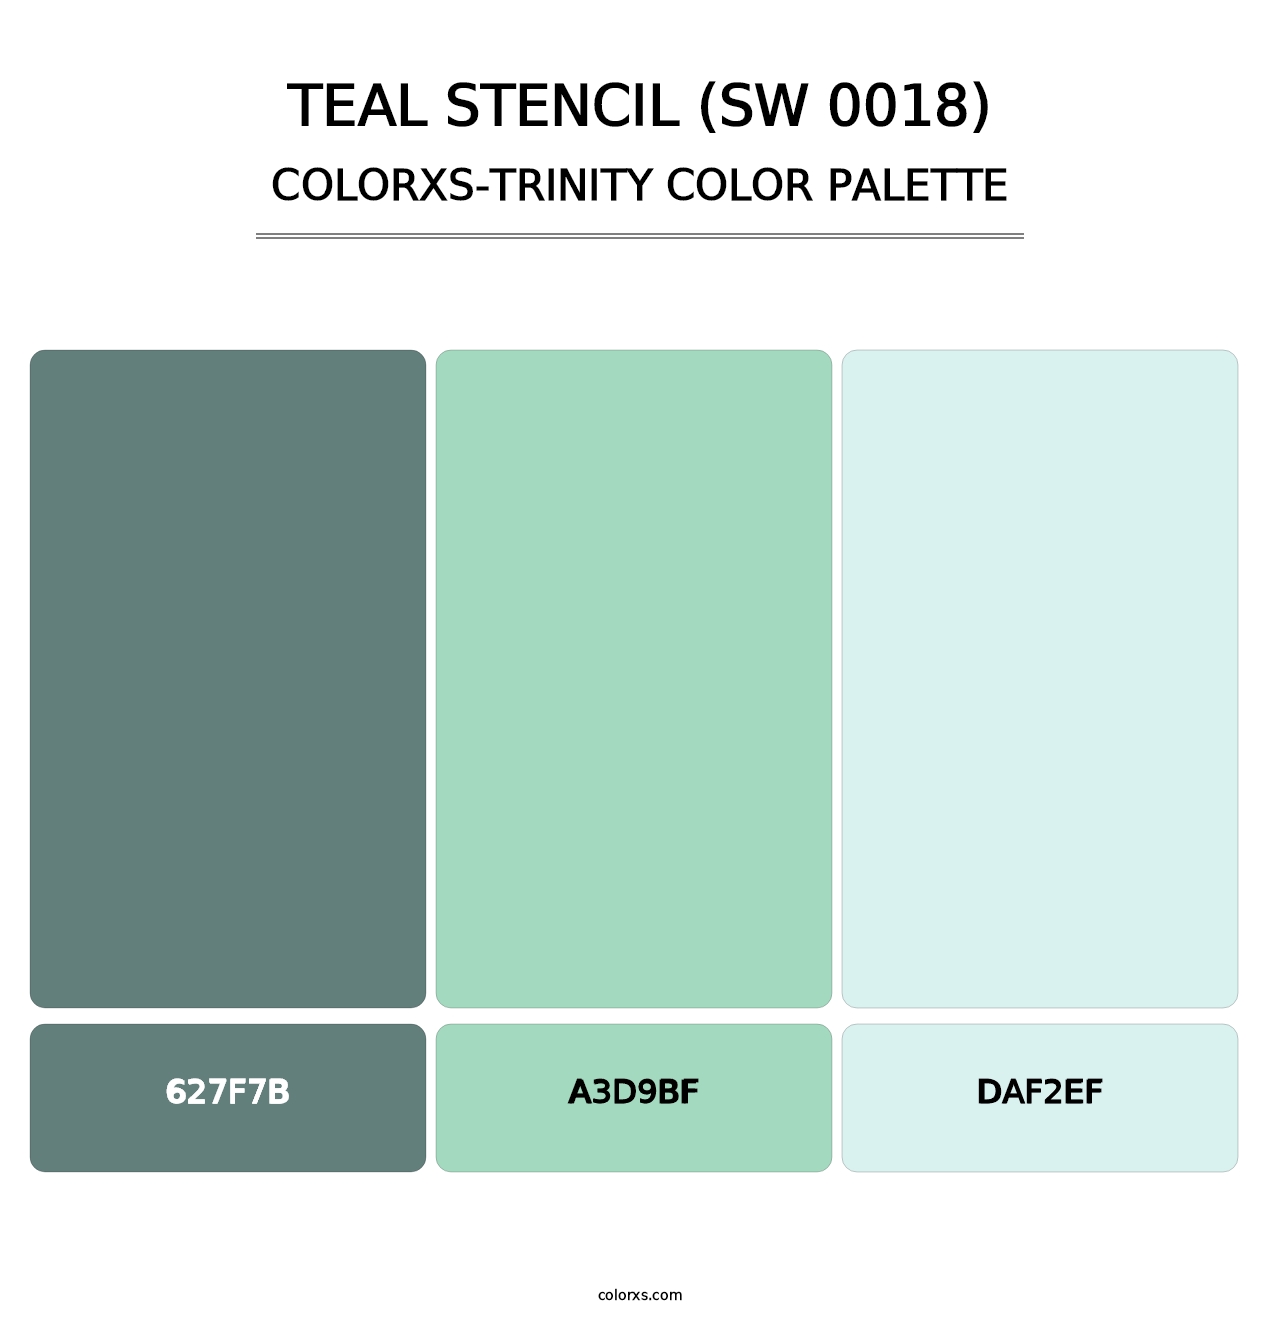 Teal Stencil (SW 0018) - Colorxs Trinity Palette